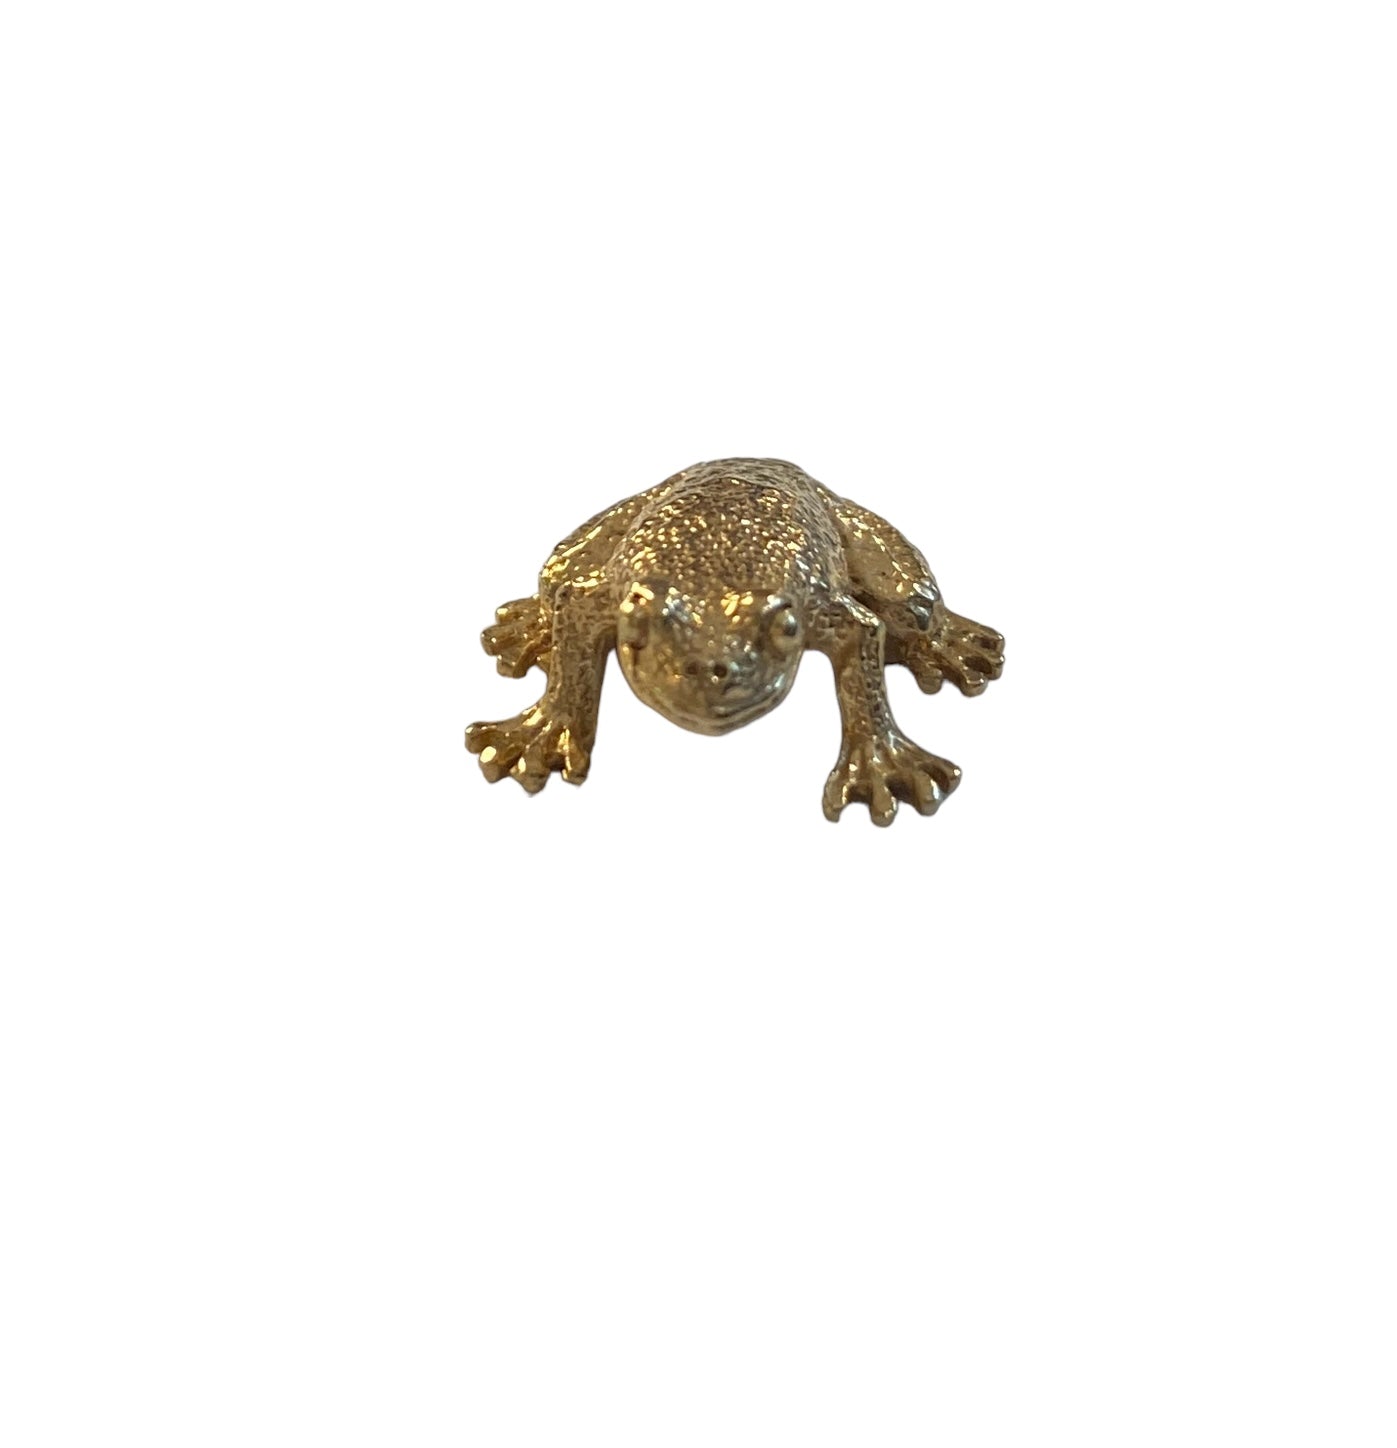 9ct vintage gold frog charm circa 1968 maker PPld